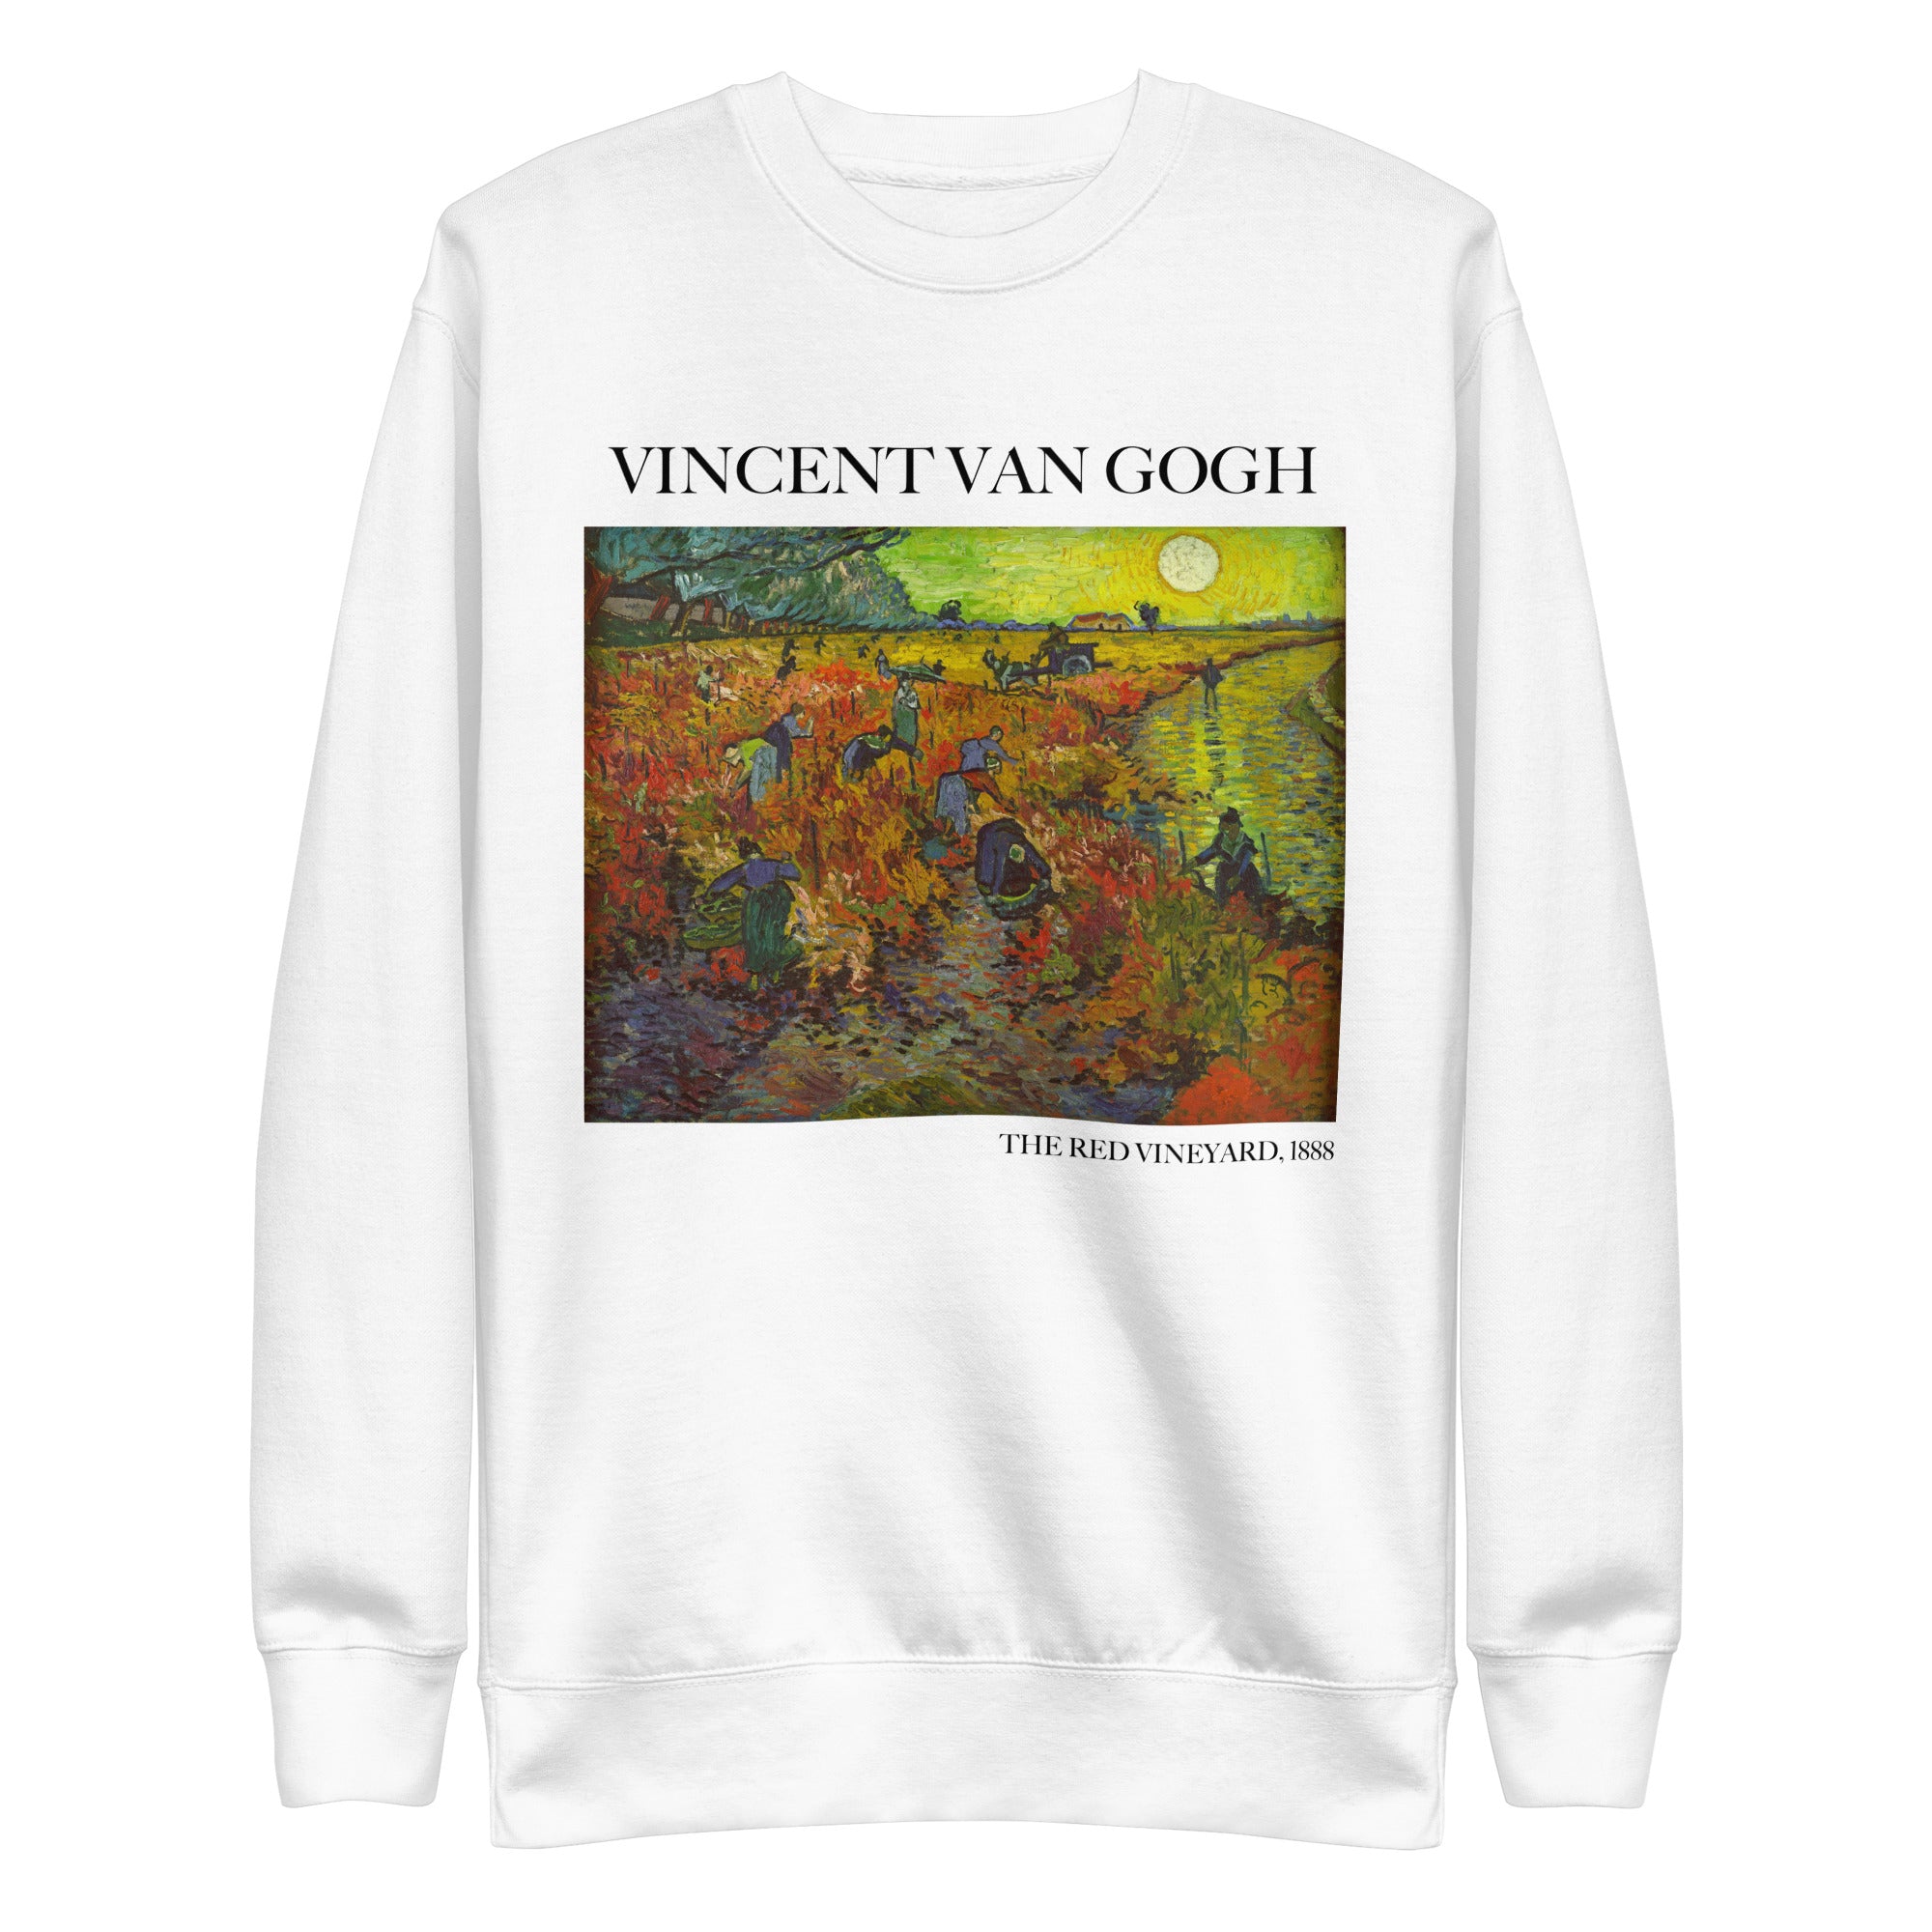 Vincent van Gogh 'The Red Vineyard' Famous Painting Sweatshirt | Unisex Premium Sweatshirt